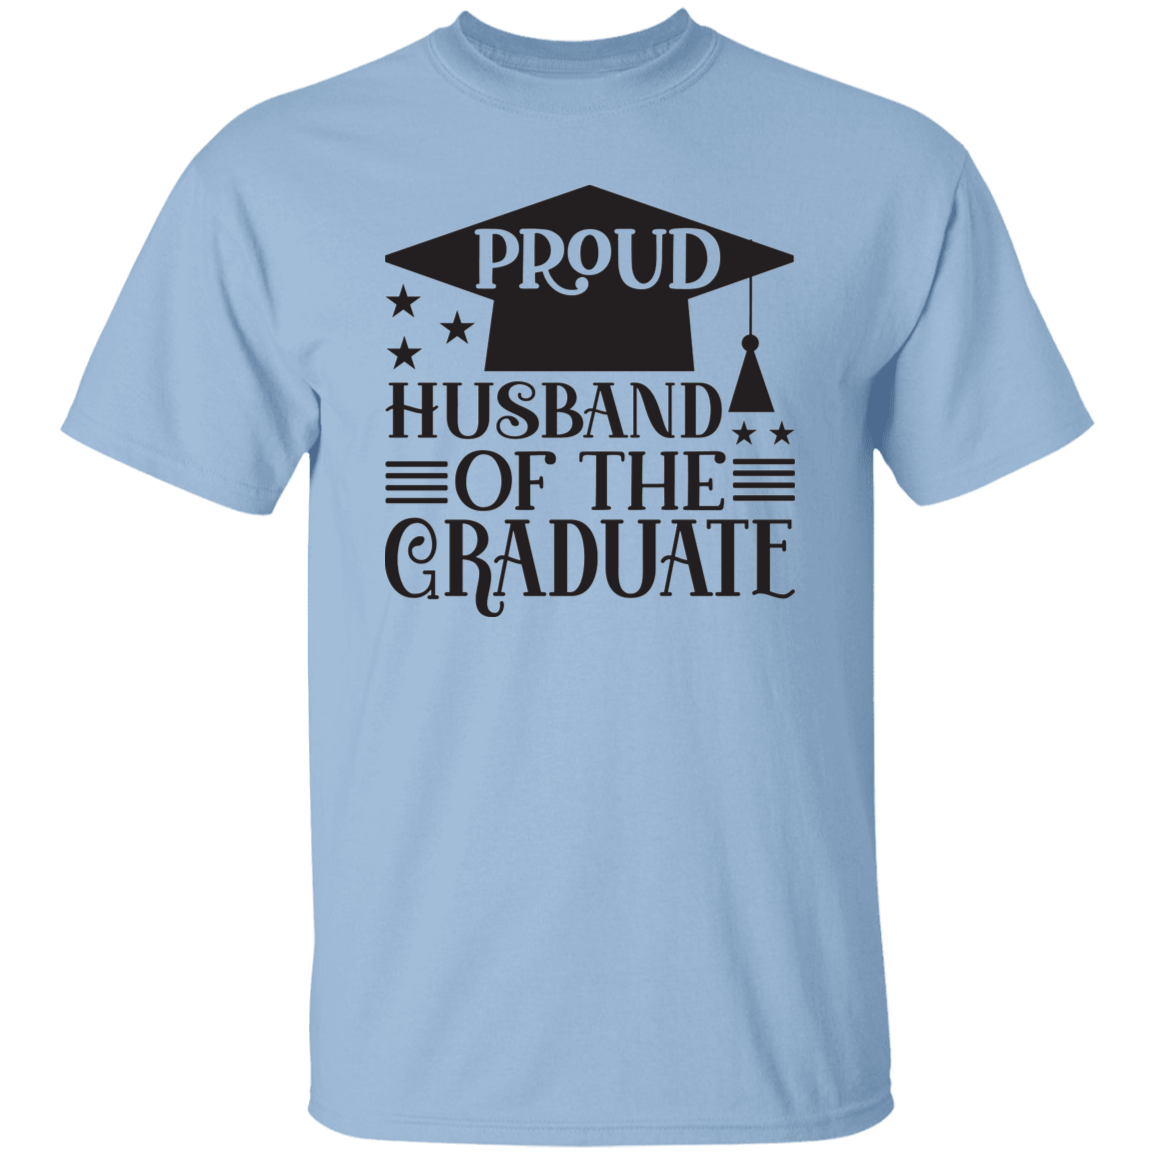 Husband of the Graduate 5.3 oz. T-Shirt